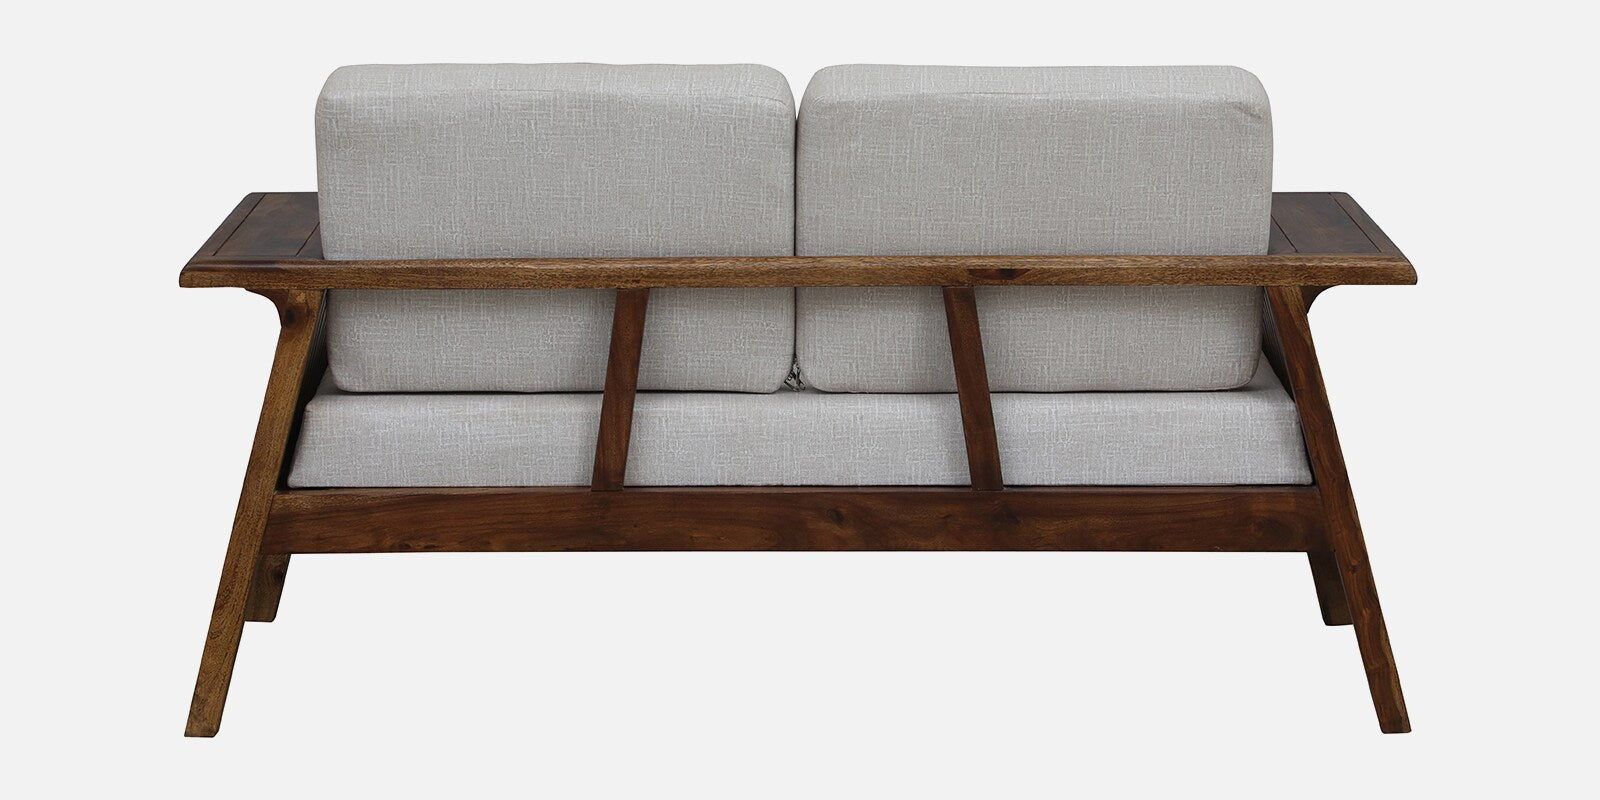 Sheesham Wood 2 Seater Sofa In Scratch Resistant Beige & Provincial Teak Finish